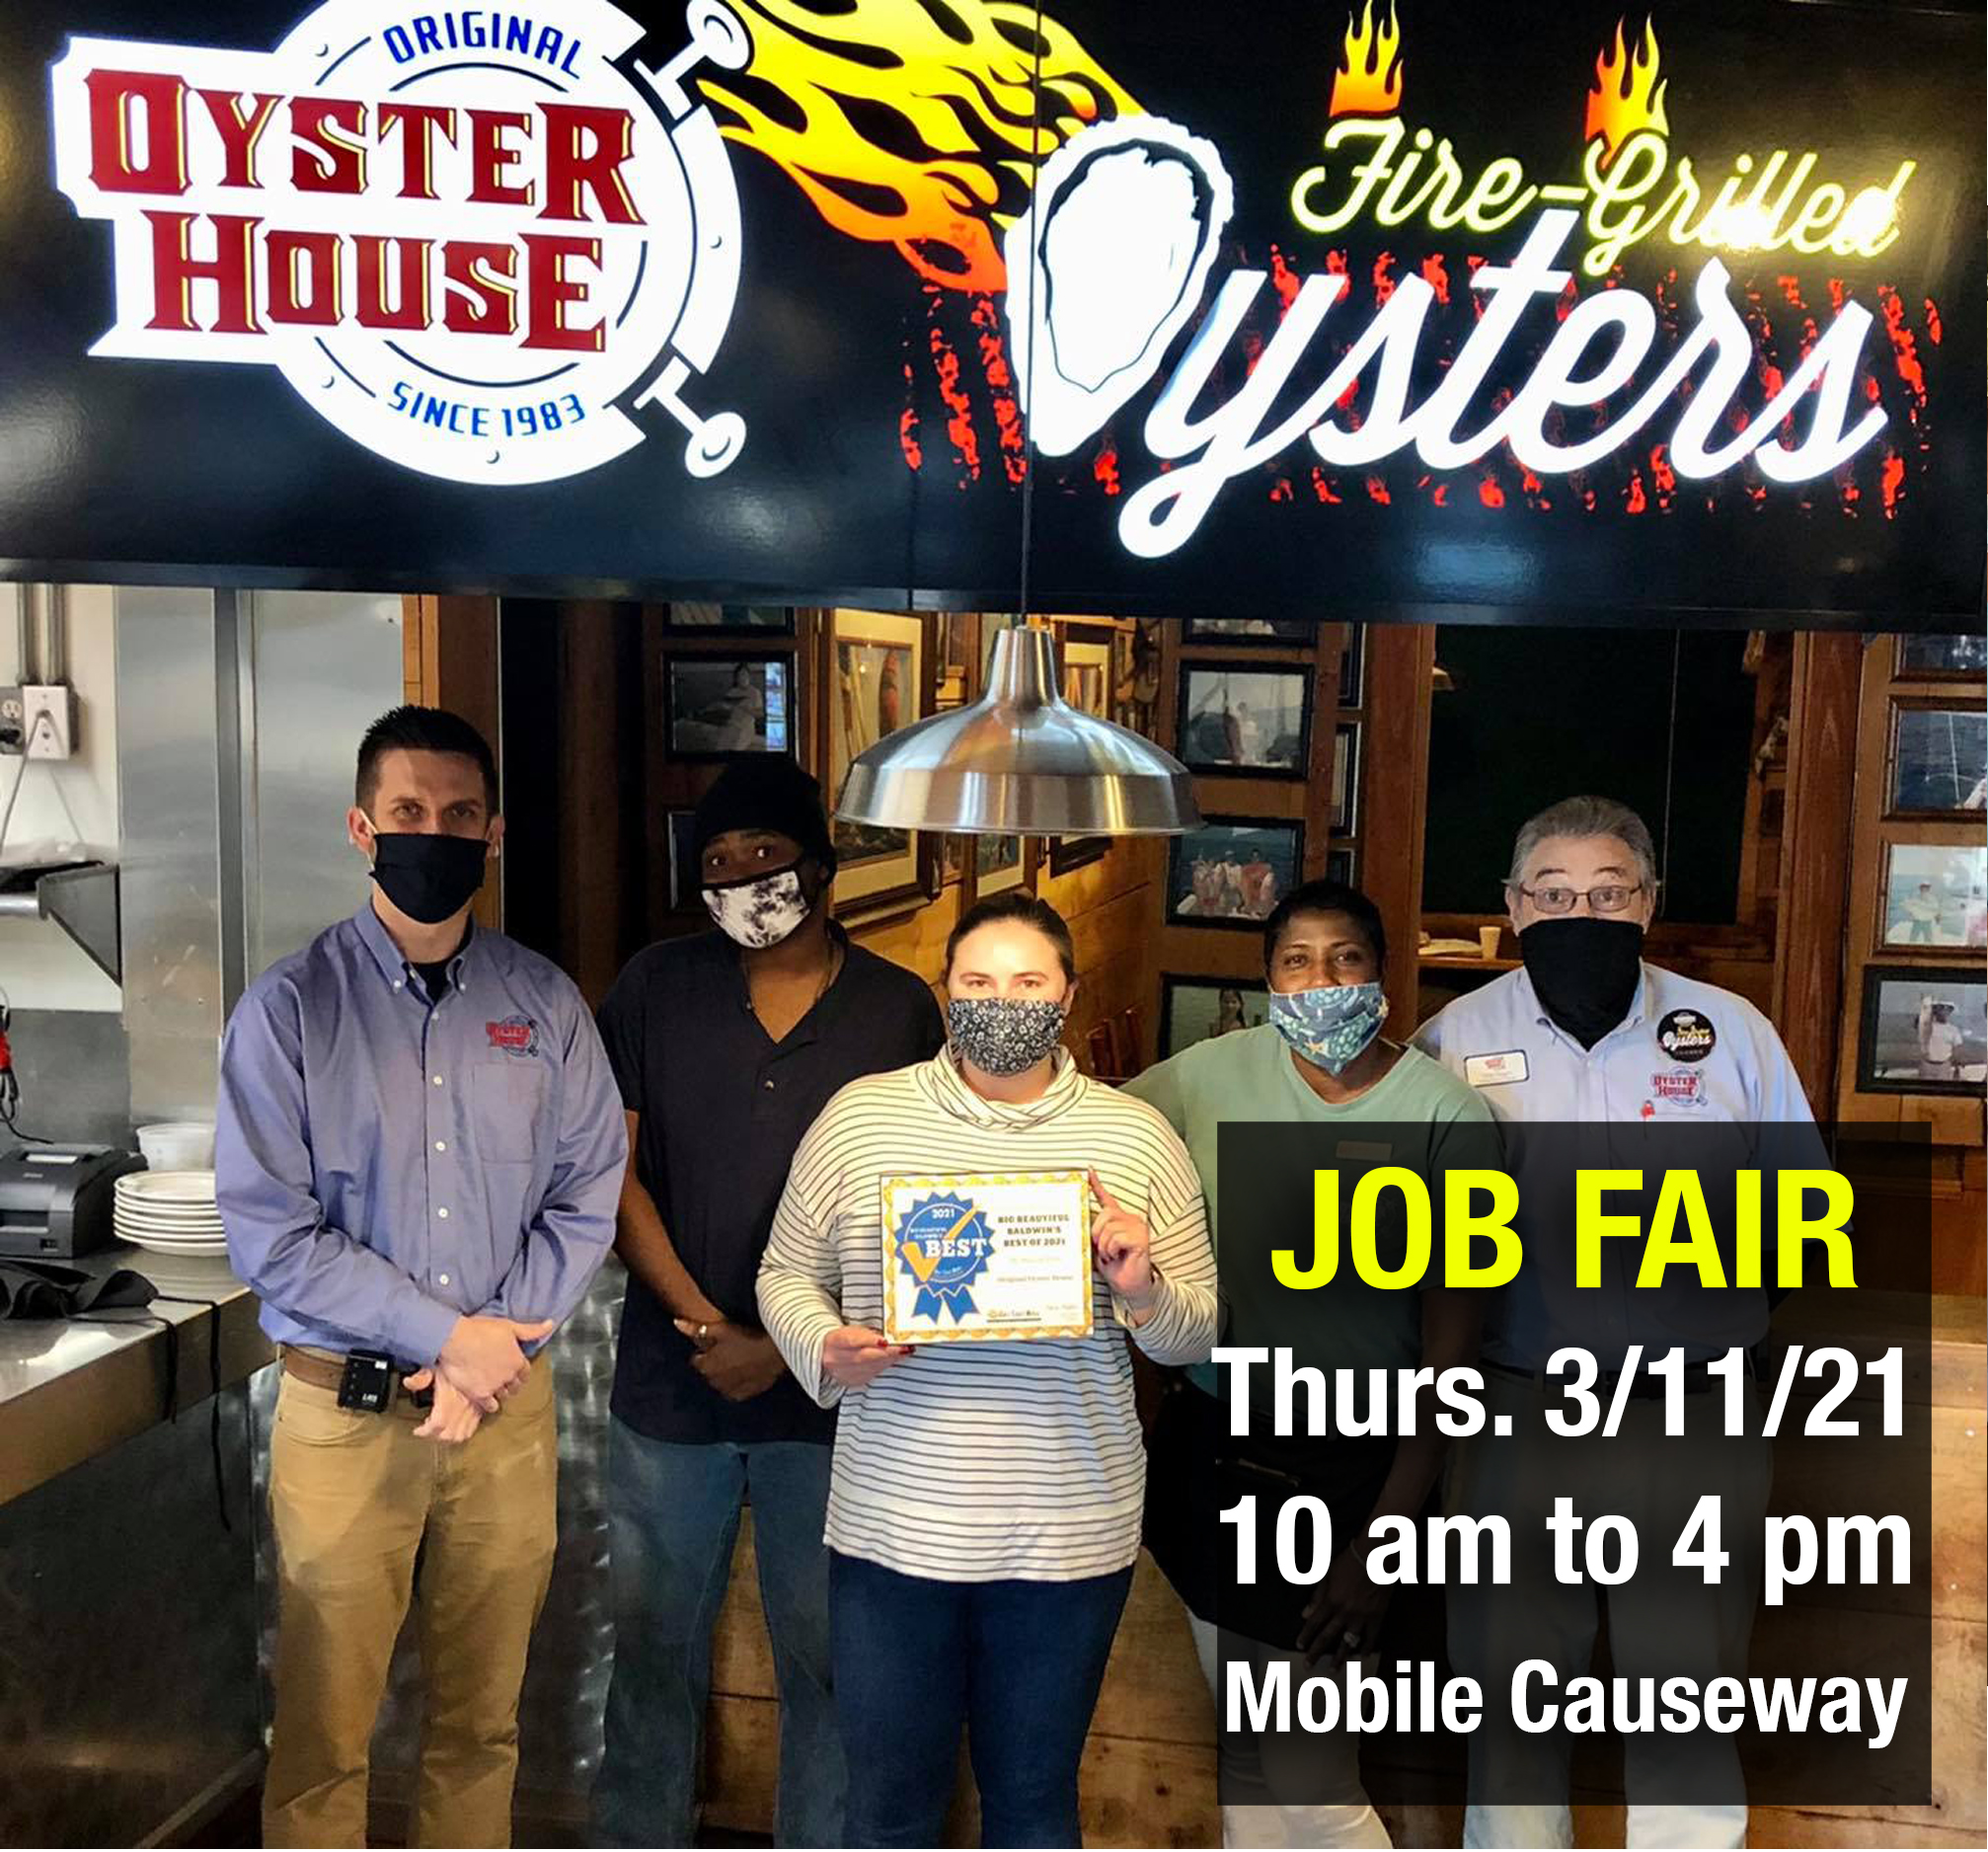 Mobile Causeway Job Fair Thurs. March 11, 2021